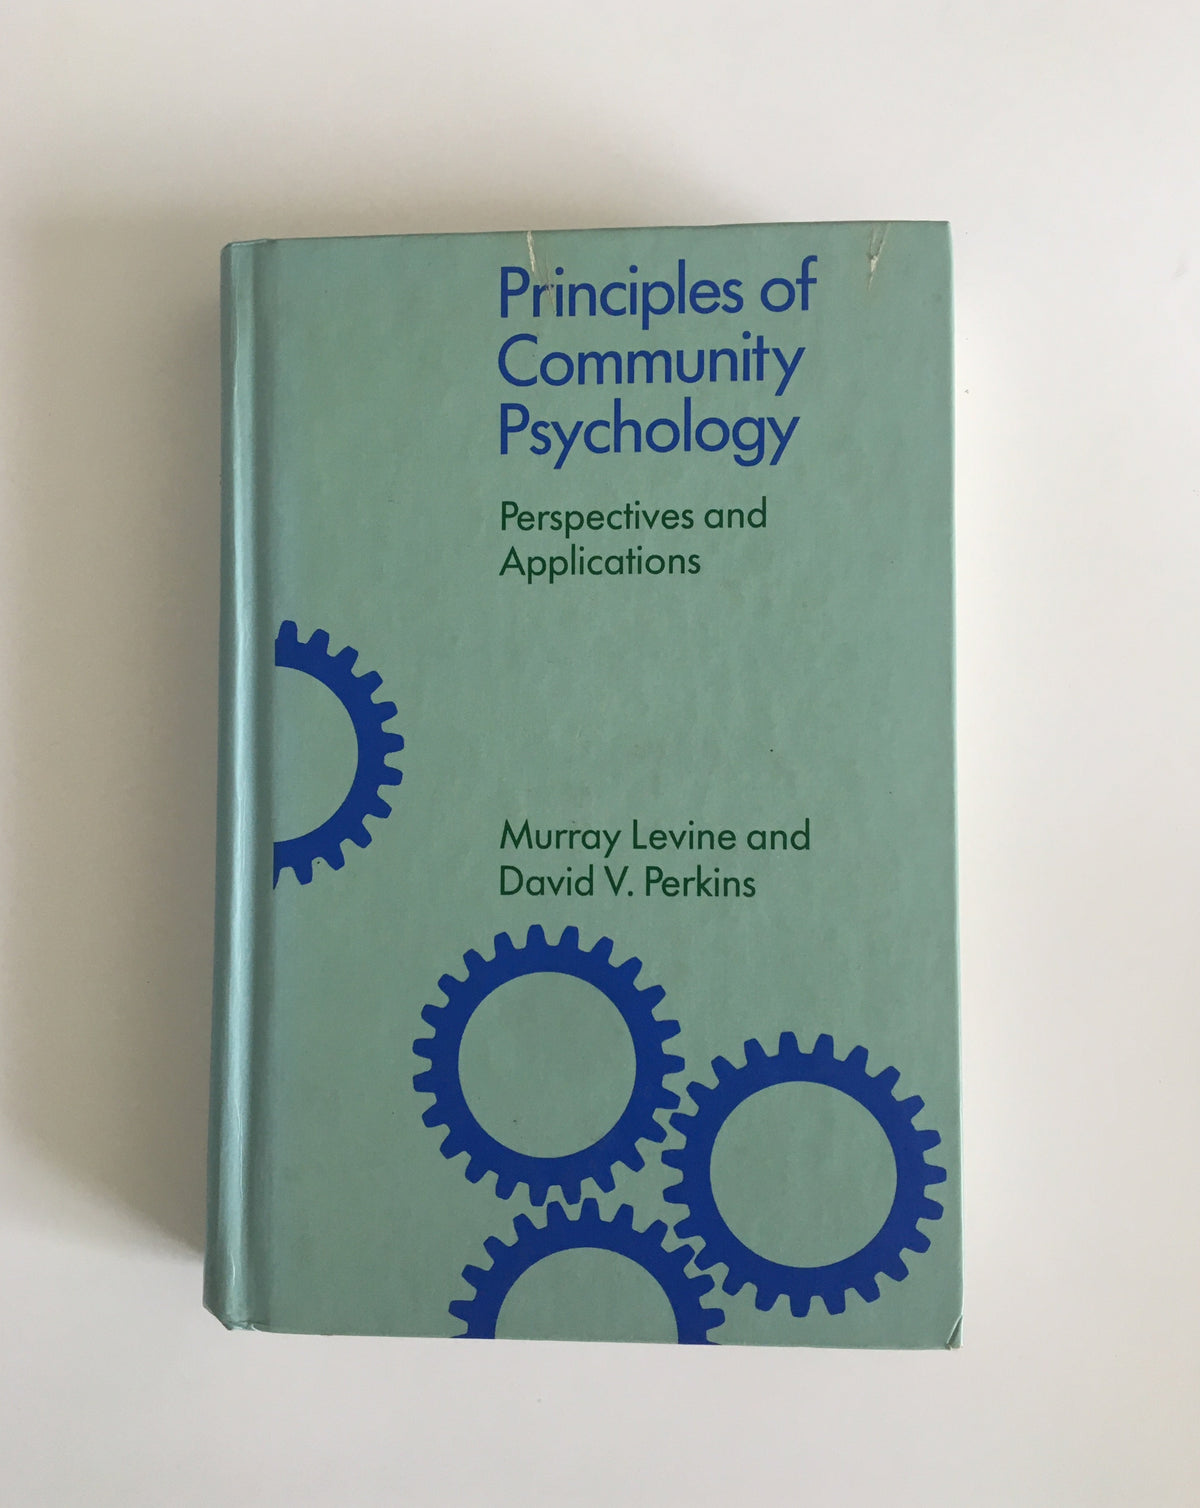 Principles of Community Psychology by Murray Levine &amp; David Perkins